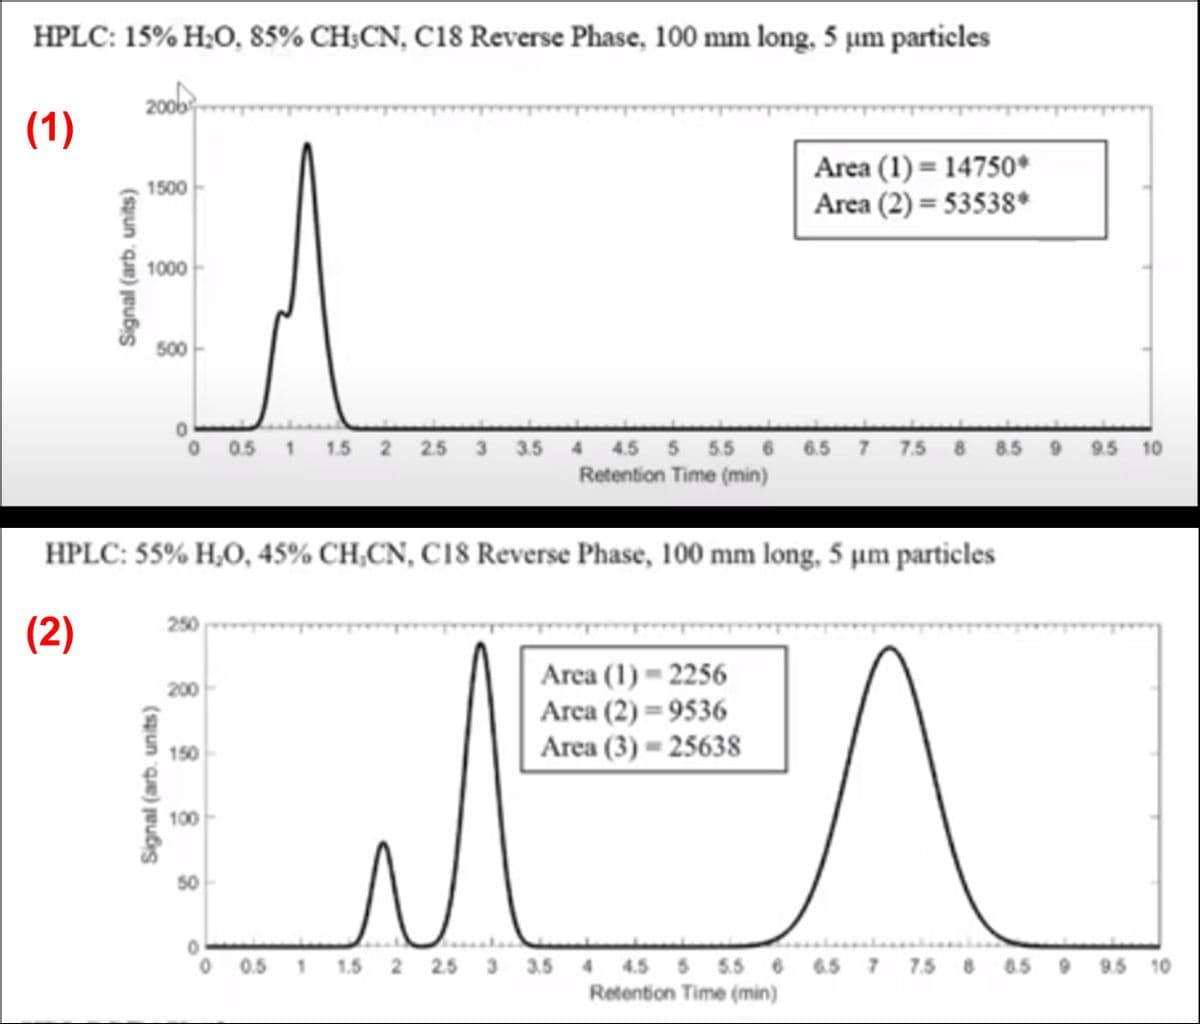 HPLC: 15% H₂O, 85% CH3CN, C18 Reverse Phase, 100 mm long, 5 um particles
2006
(1)
1500
Area (1)= 14750*
Area (2)=53538*
1000
500
6.5 7 7.5 8 8.5 9 9.5 10
0 0.5 1 1.5 2 2.5 3 3.5 4 4.5 5 5.5 6
Retention Time (min)
HPLC: 55% H₂O, 45% CH,CN, C18 Reverse Phase, 100 mm long, 5 µm particles
250
(2)
200
Area (1) -2256
Area (2)=9536
Area (3)=25638
150
N
100
50
^
0.5 1 1.5 2 2.5 3 3.5
4 4.5 5 5.5 6 6.5 7 7.5 8 8.5 9 9.5 10
Retention Time (min)
Signal (arb, units)
Signal (arb. units)
0